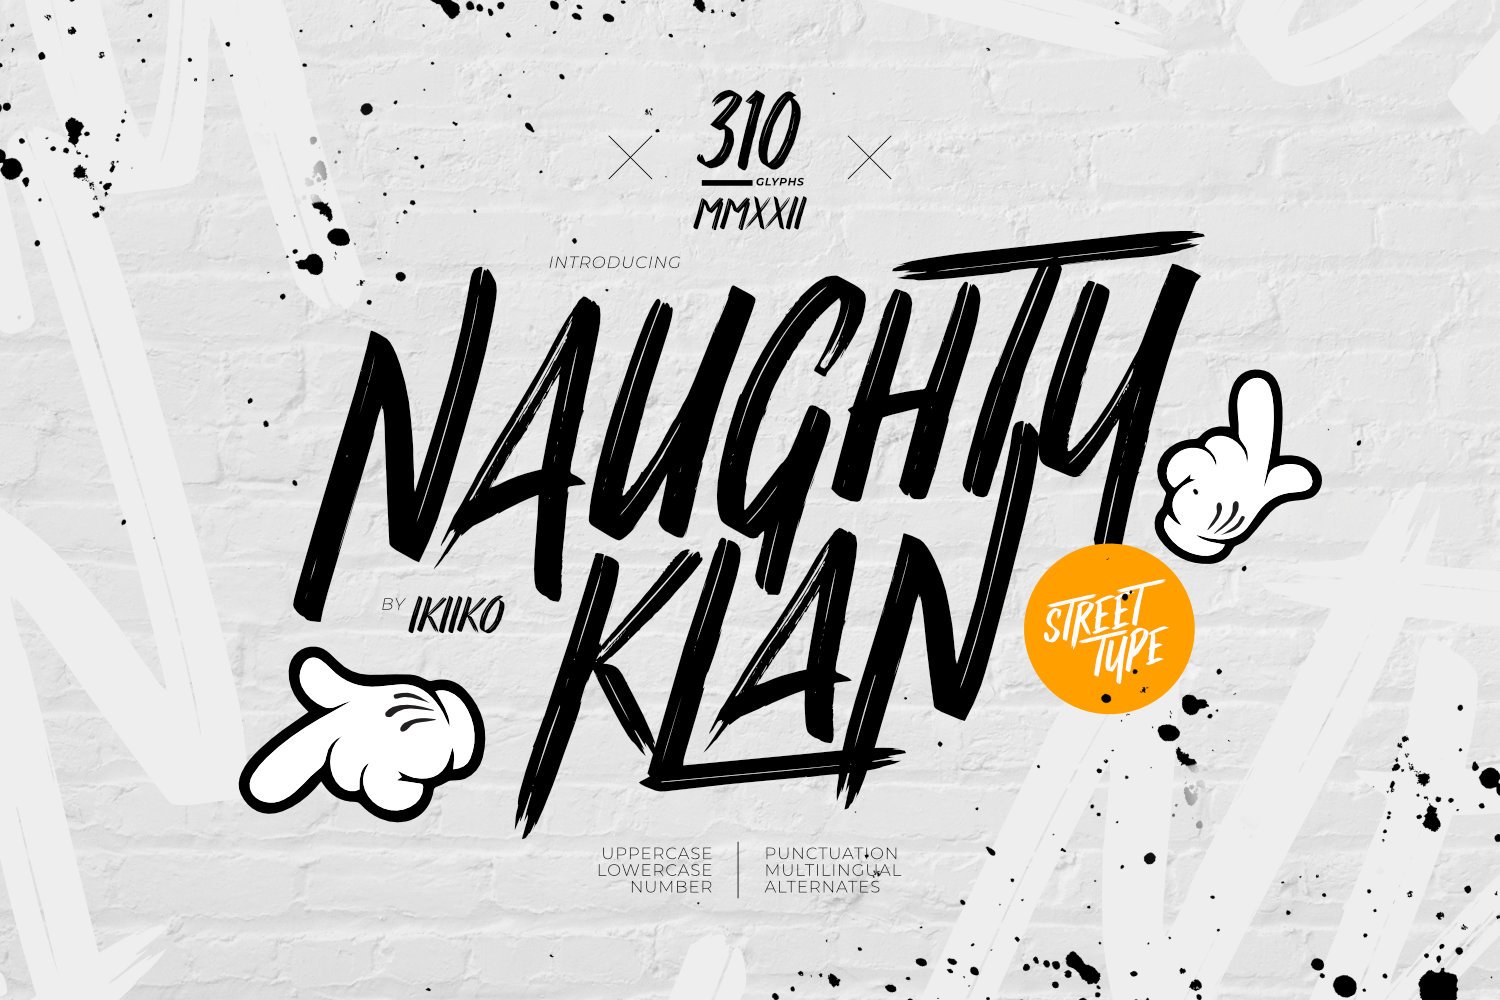 Naughty Klan - Street Type cover image.